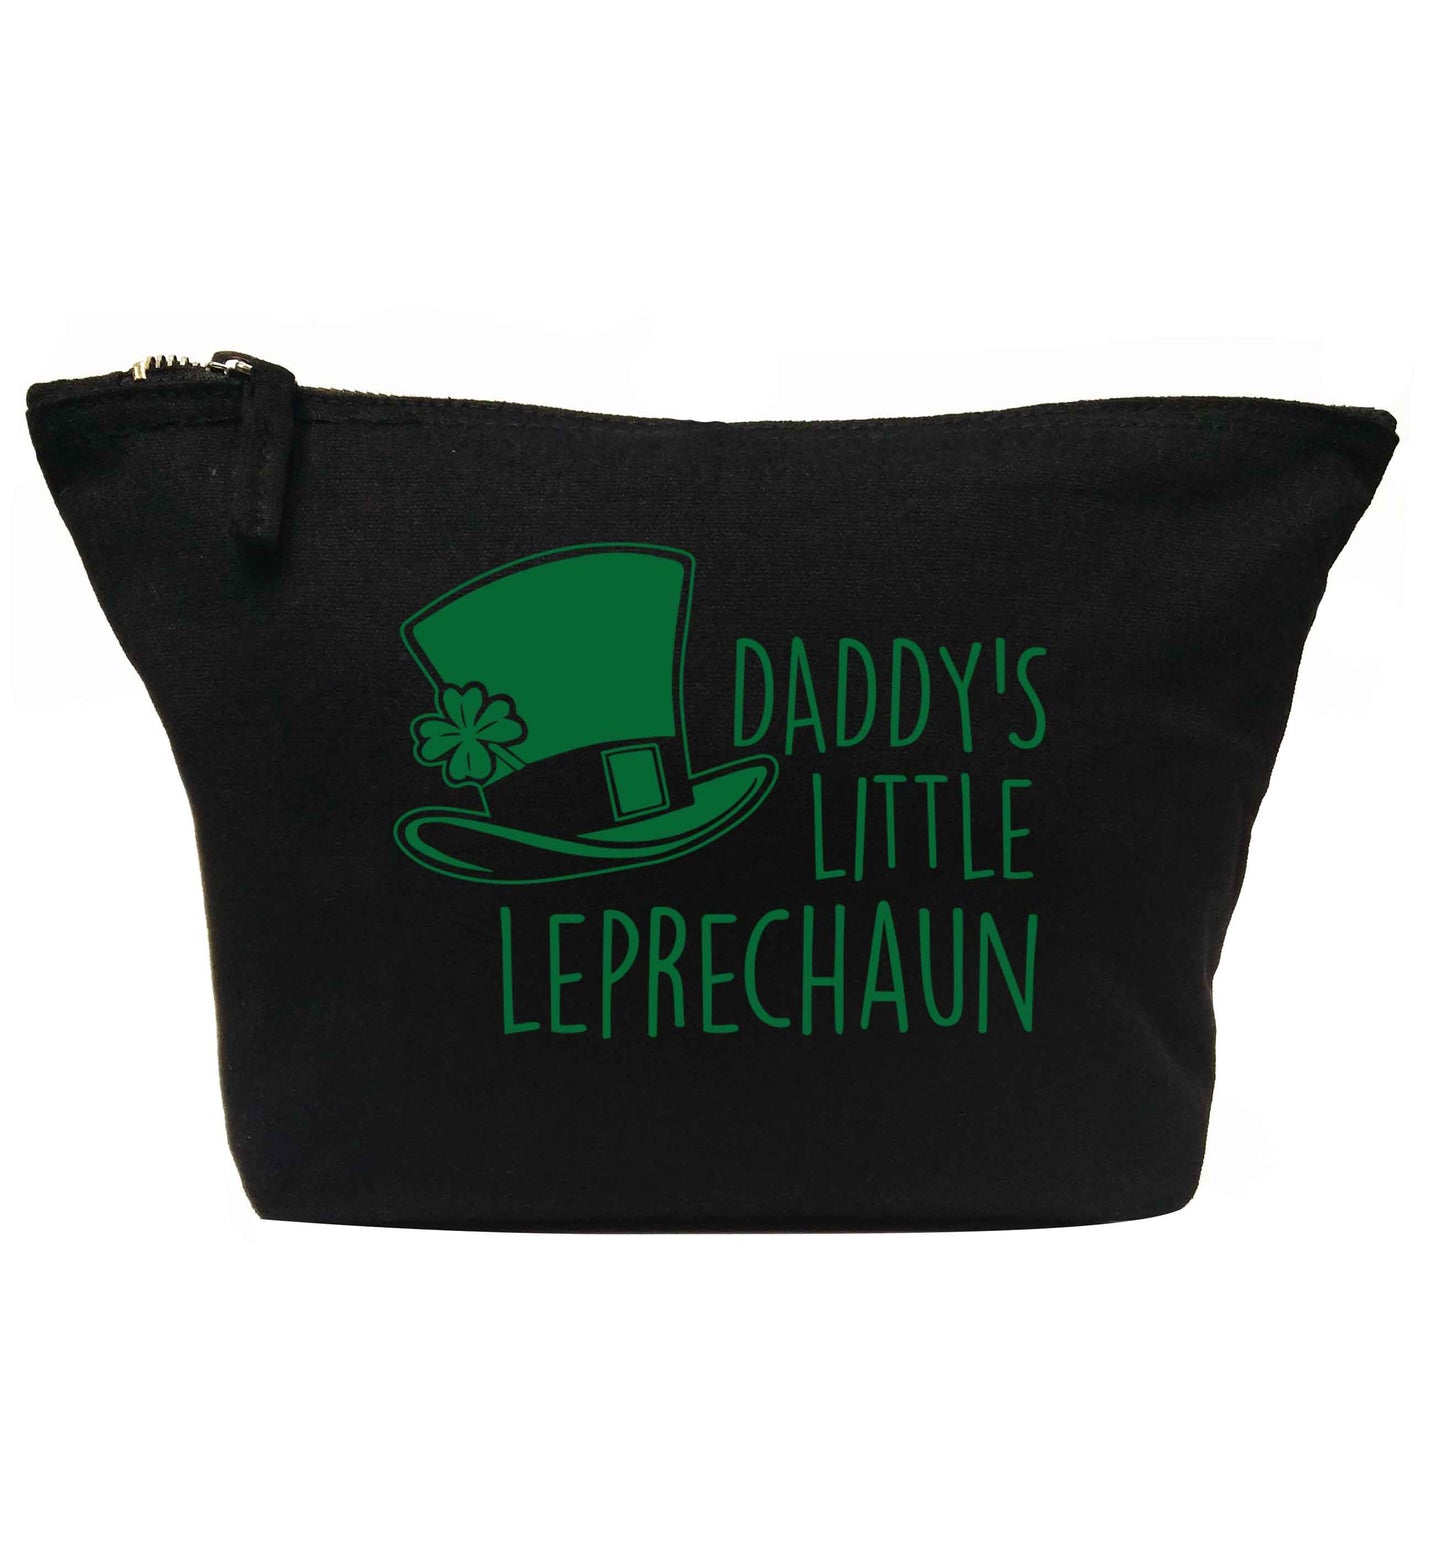 Daddy's little leprechaun | Makeup / wash bag